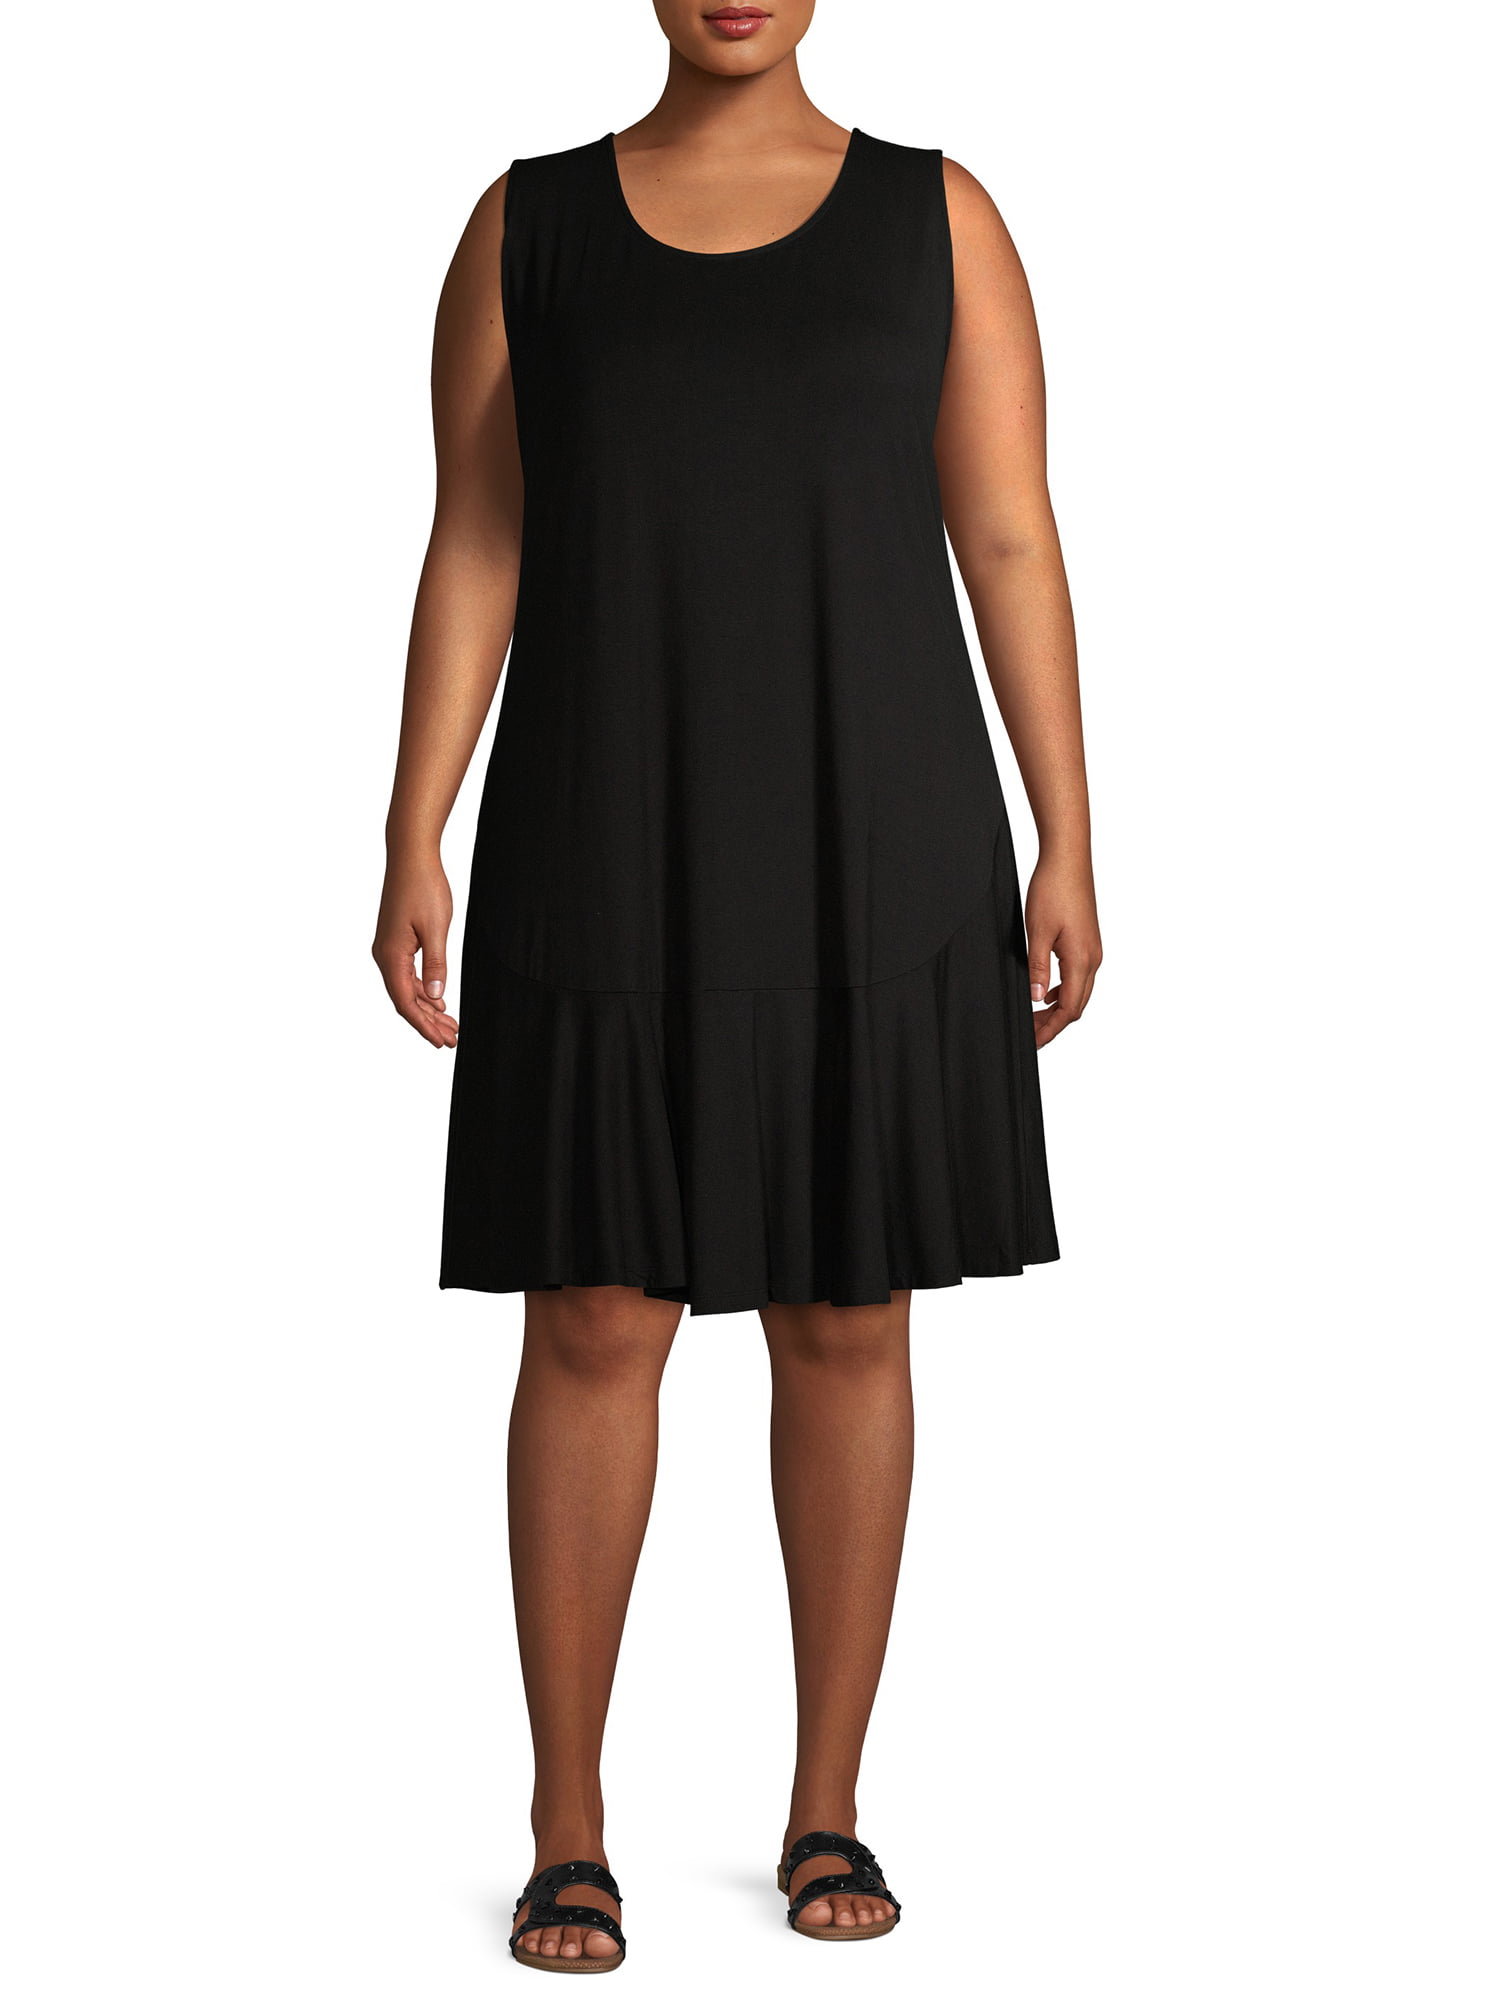 Terra & Sky Women's Plus Size Sleeveless Knit Peplum Dress - Walmart.com